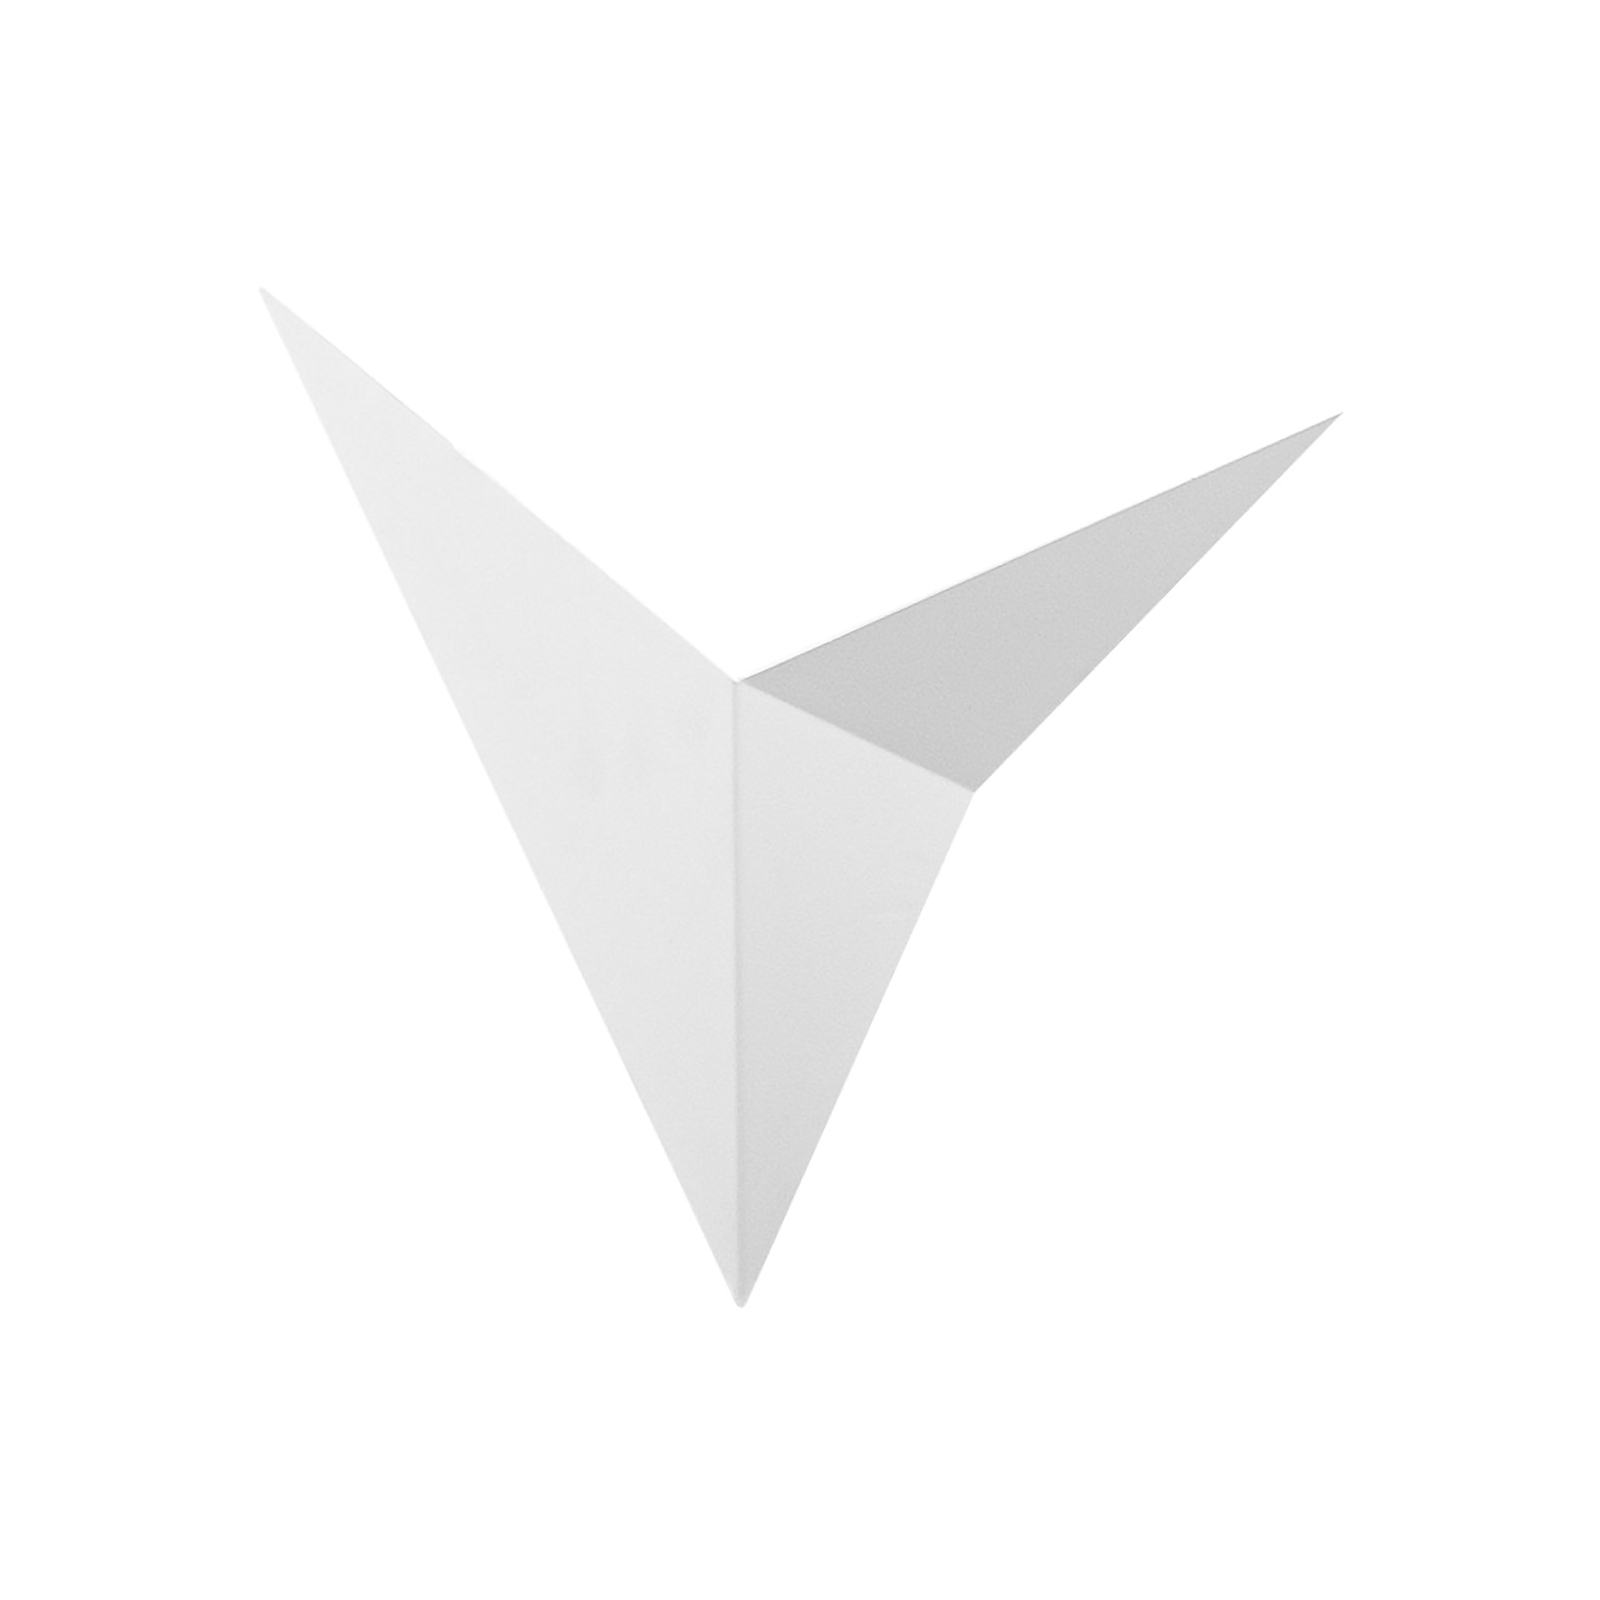 Wandlfluter Bird 3202, driehoekig ontworpen, wit